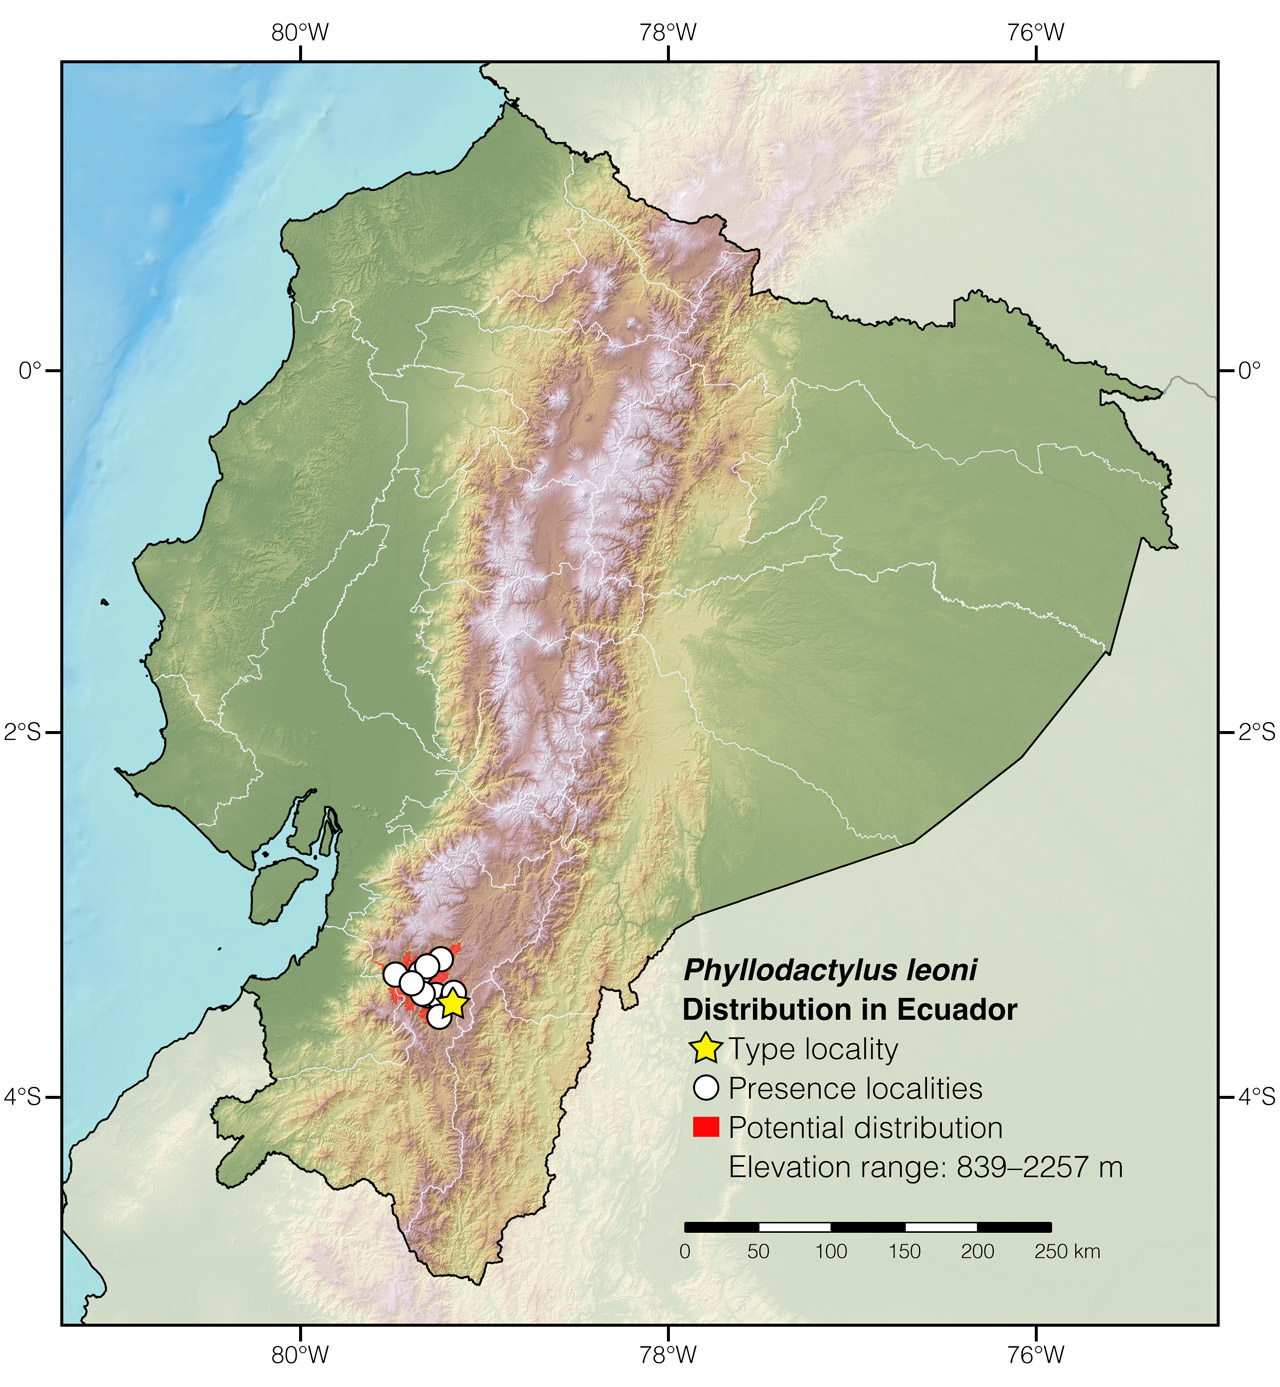 Distribution of Phyllodactylus leoni in Ecuador